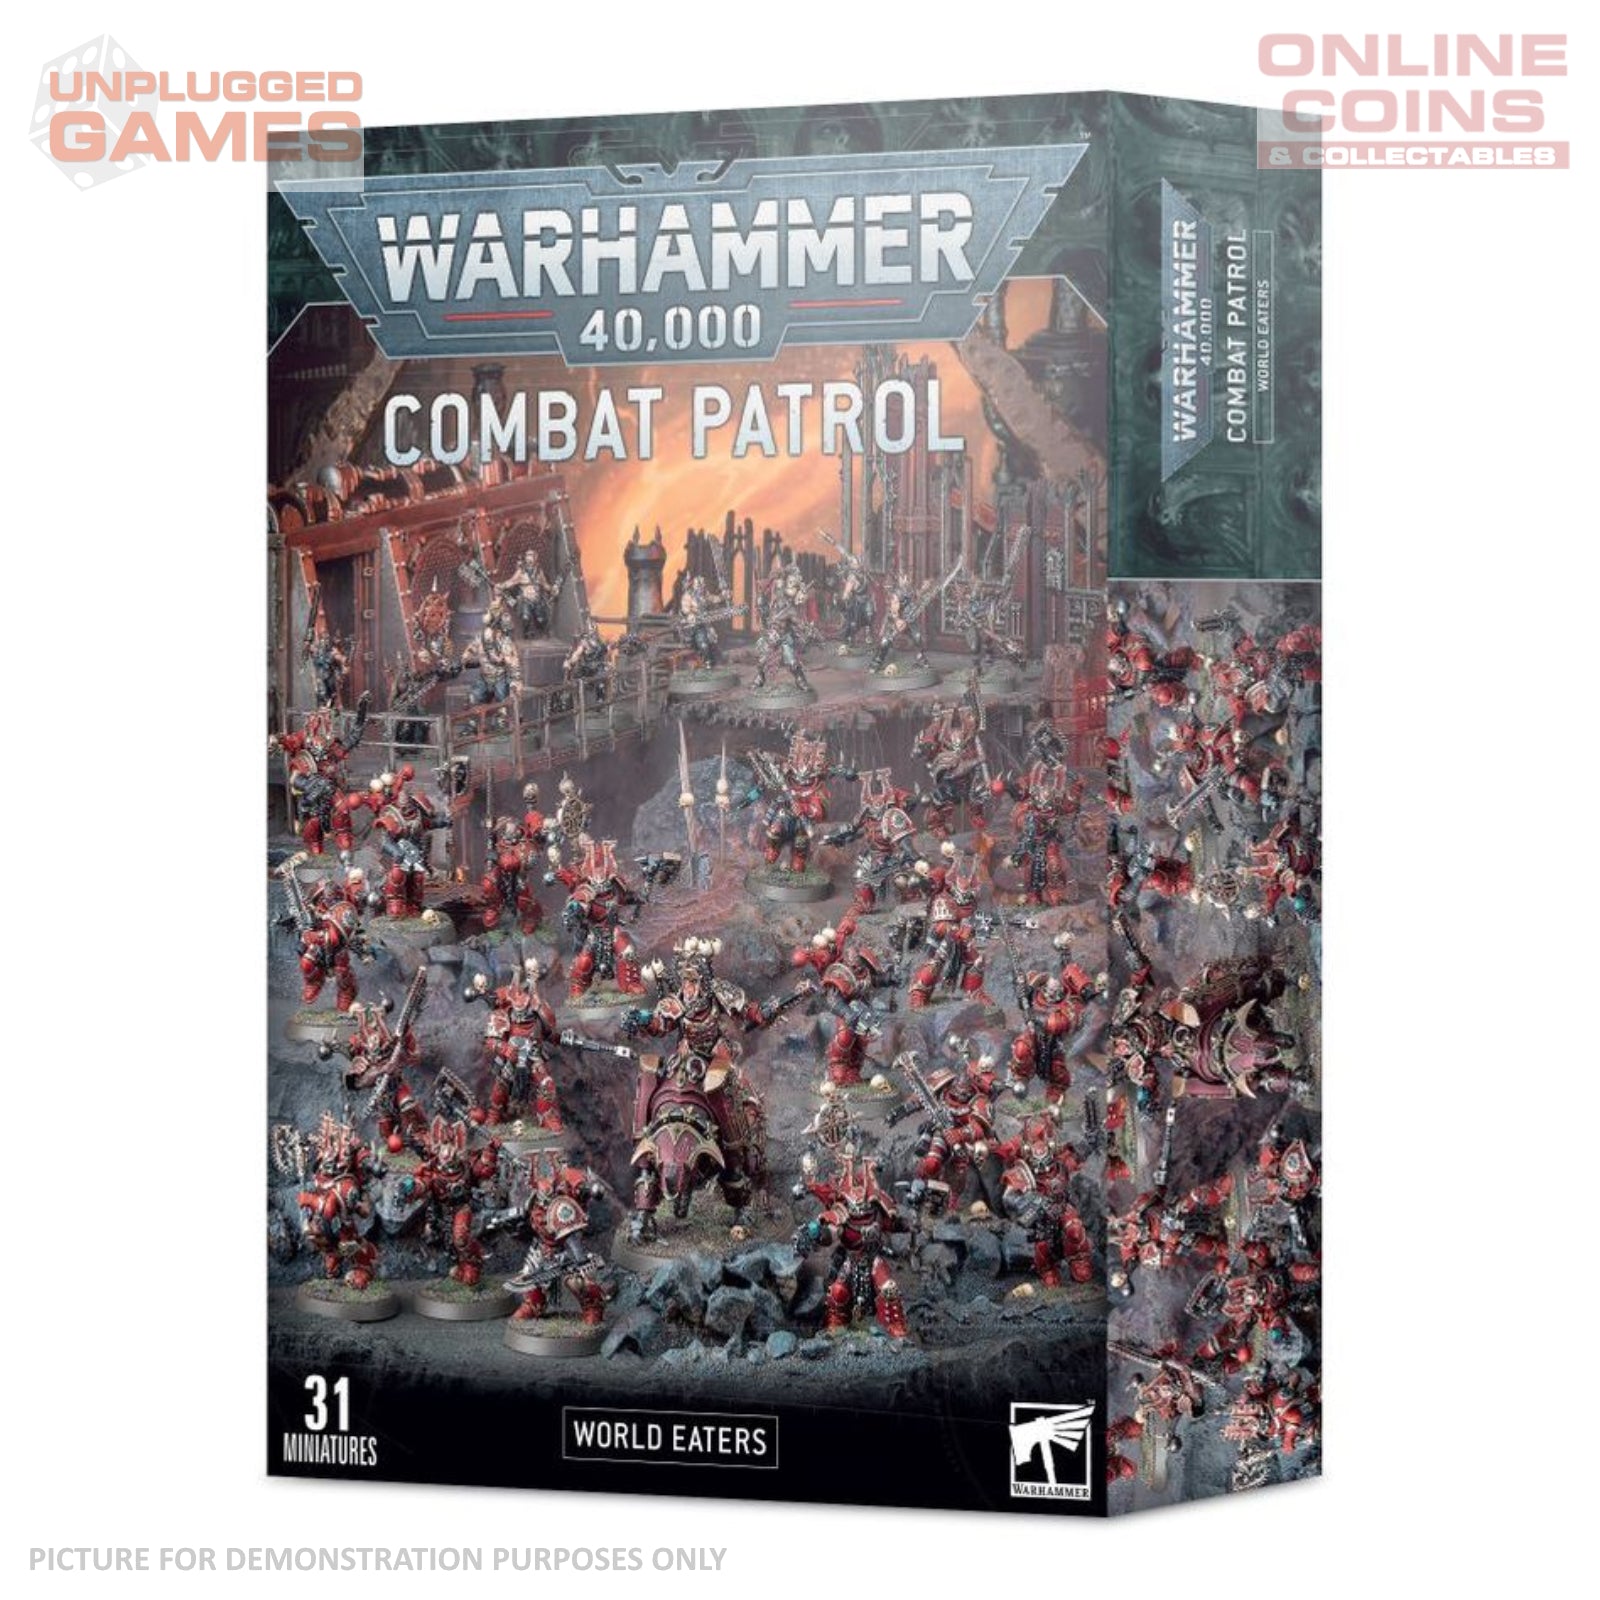 Warhammer 40,000 - Combat Patrol World Eaters